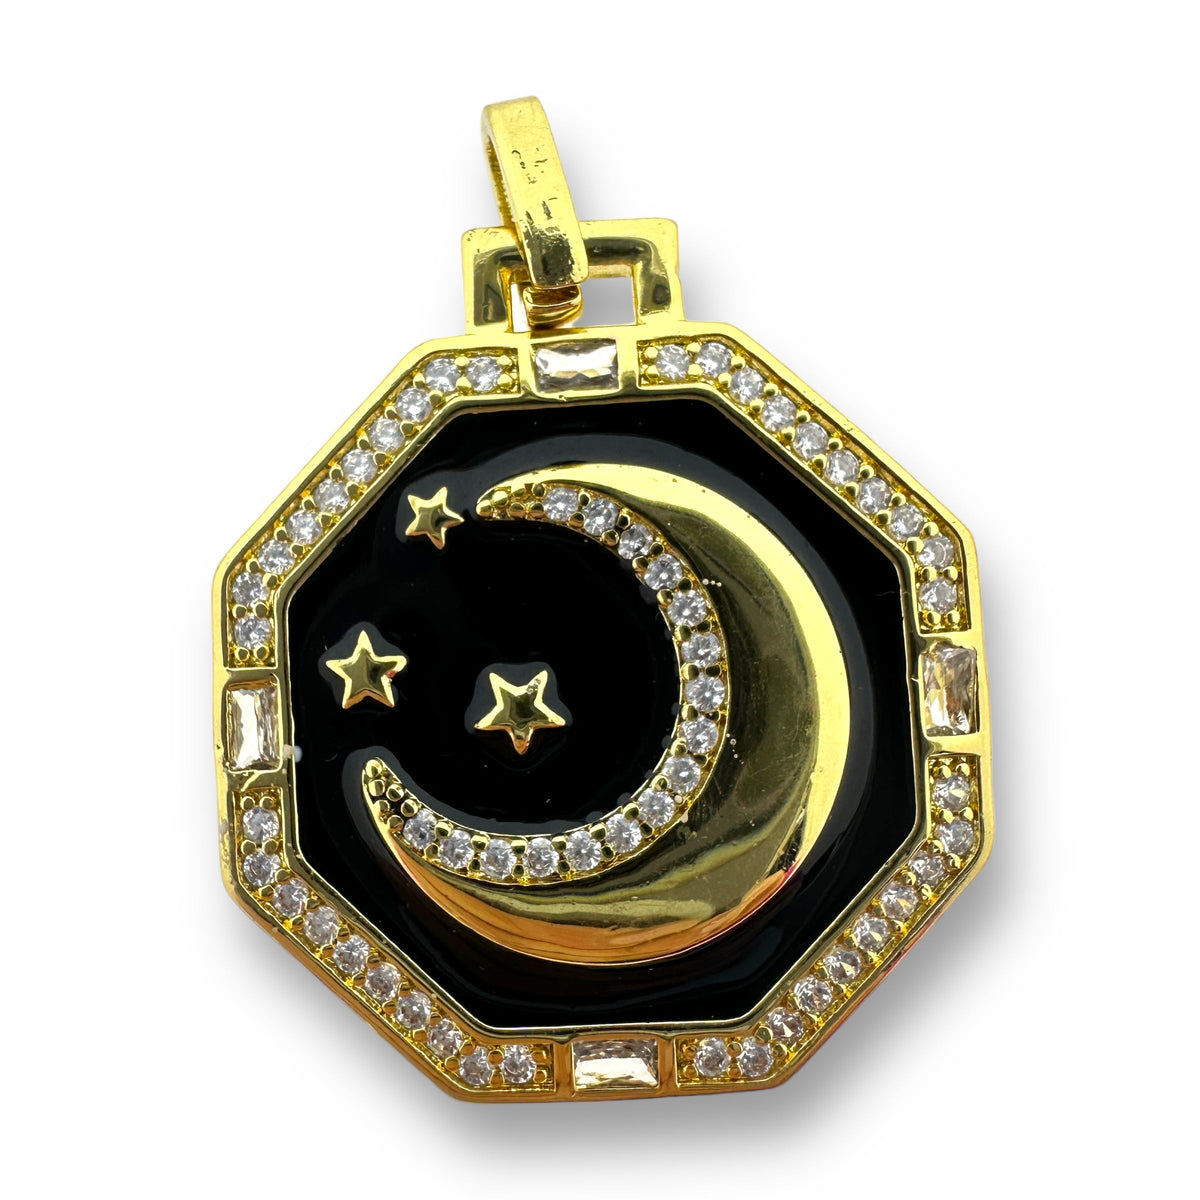 Bedel emaille achthoek maan en ster gold plated 34x29mm-bedels-Kraaltjes van Renate